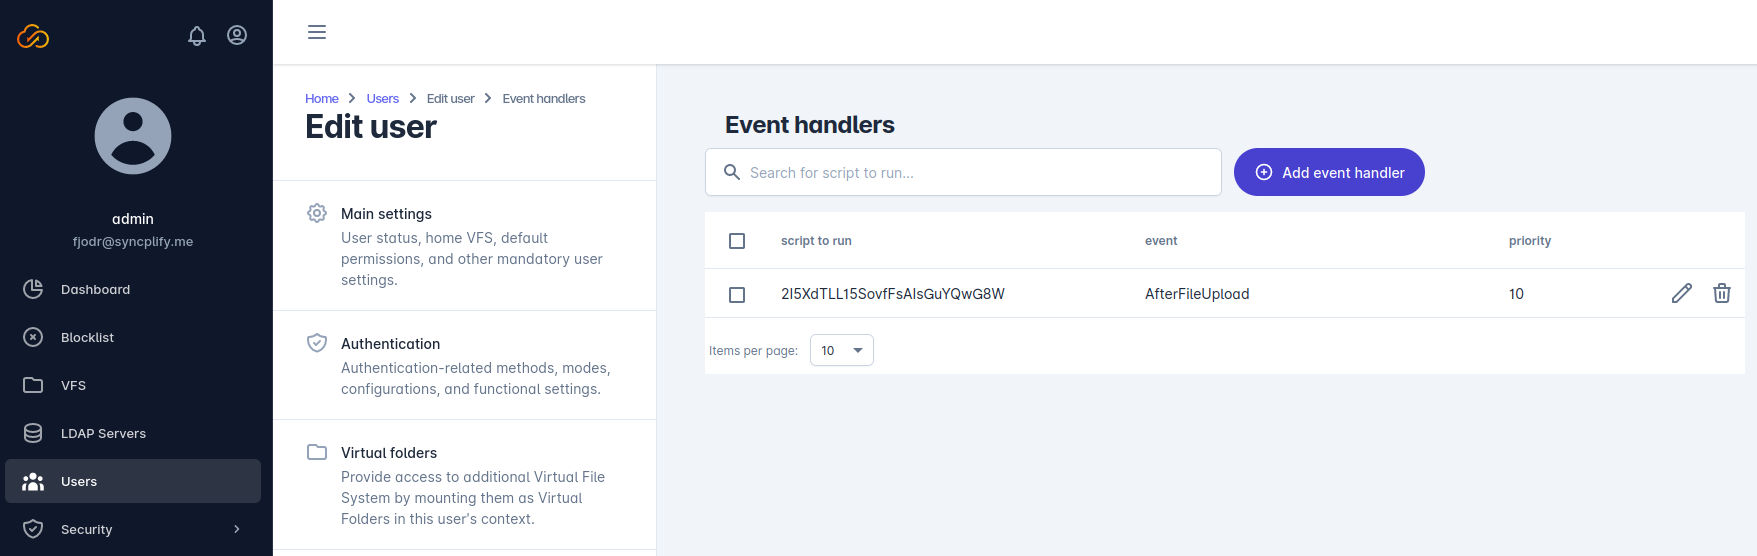 user_event_handlers